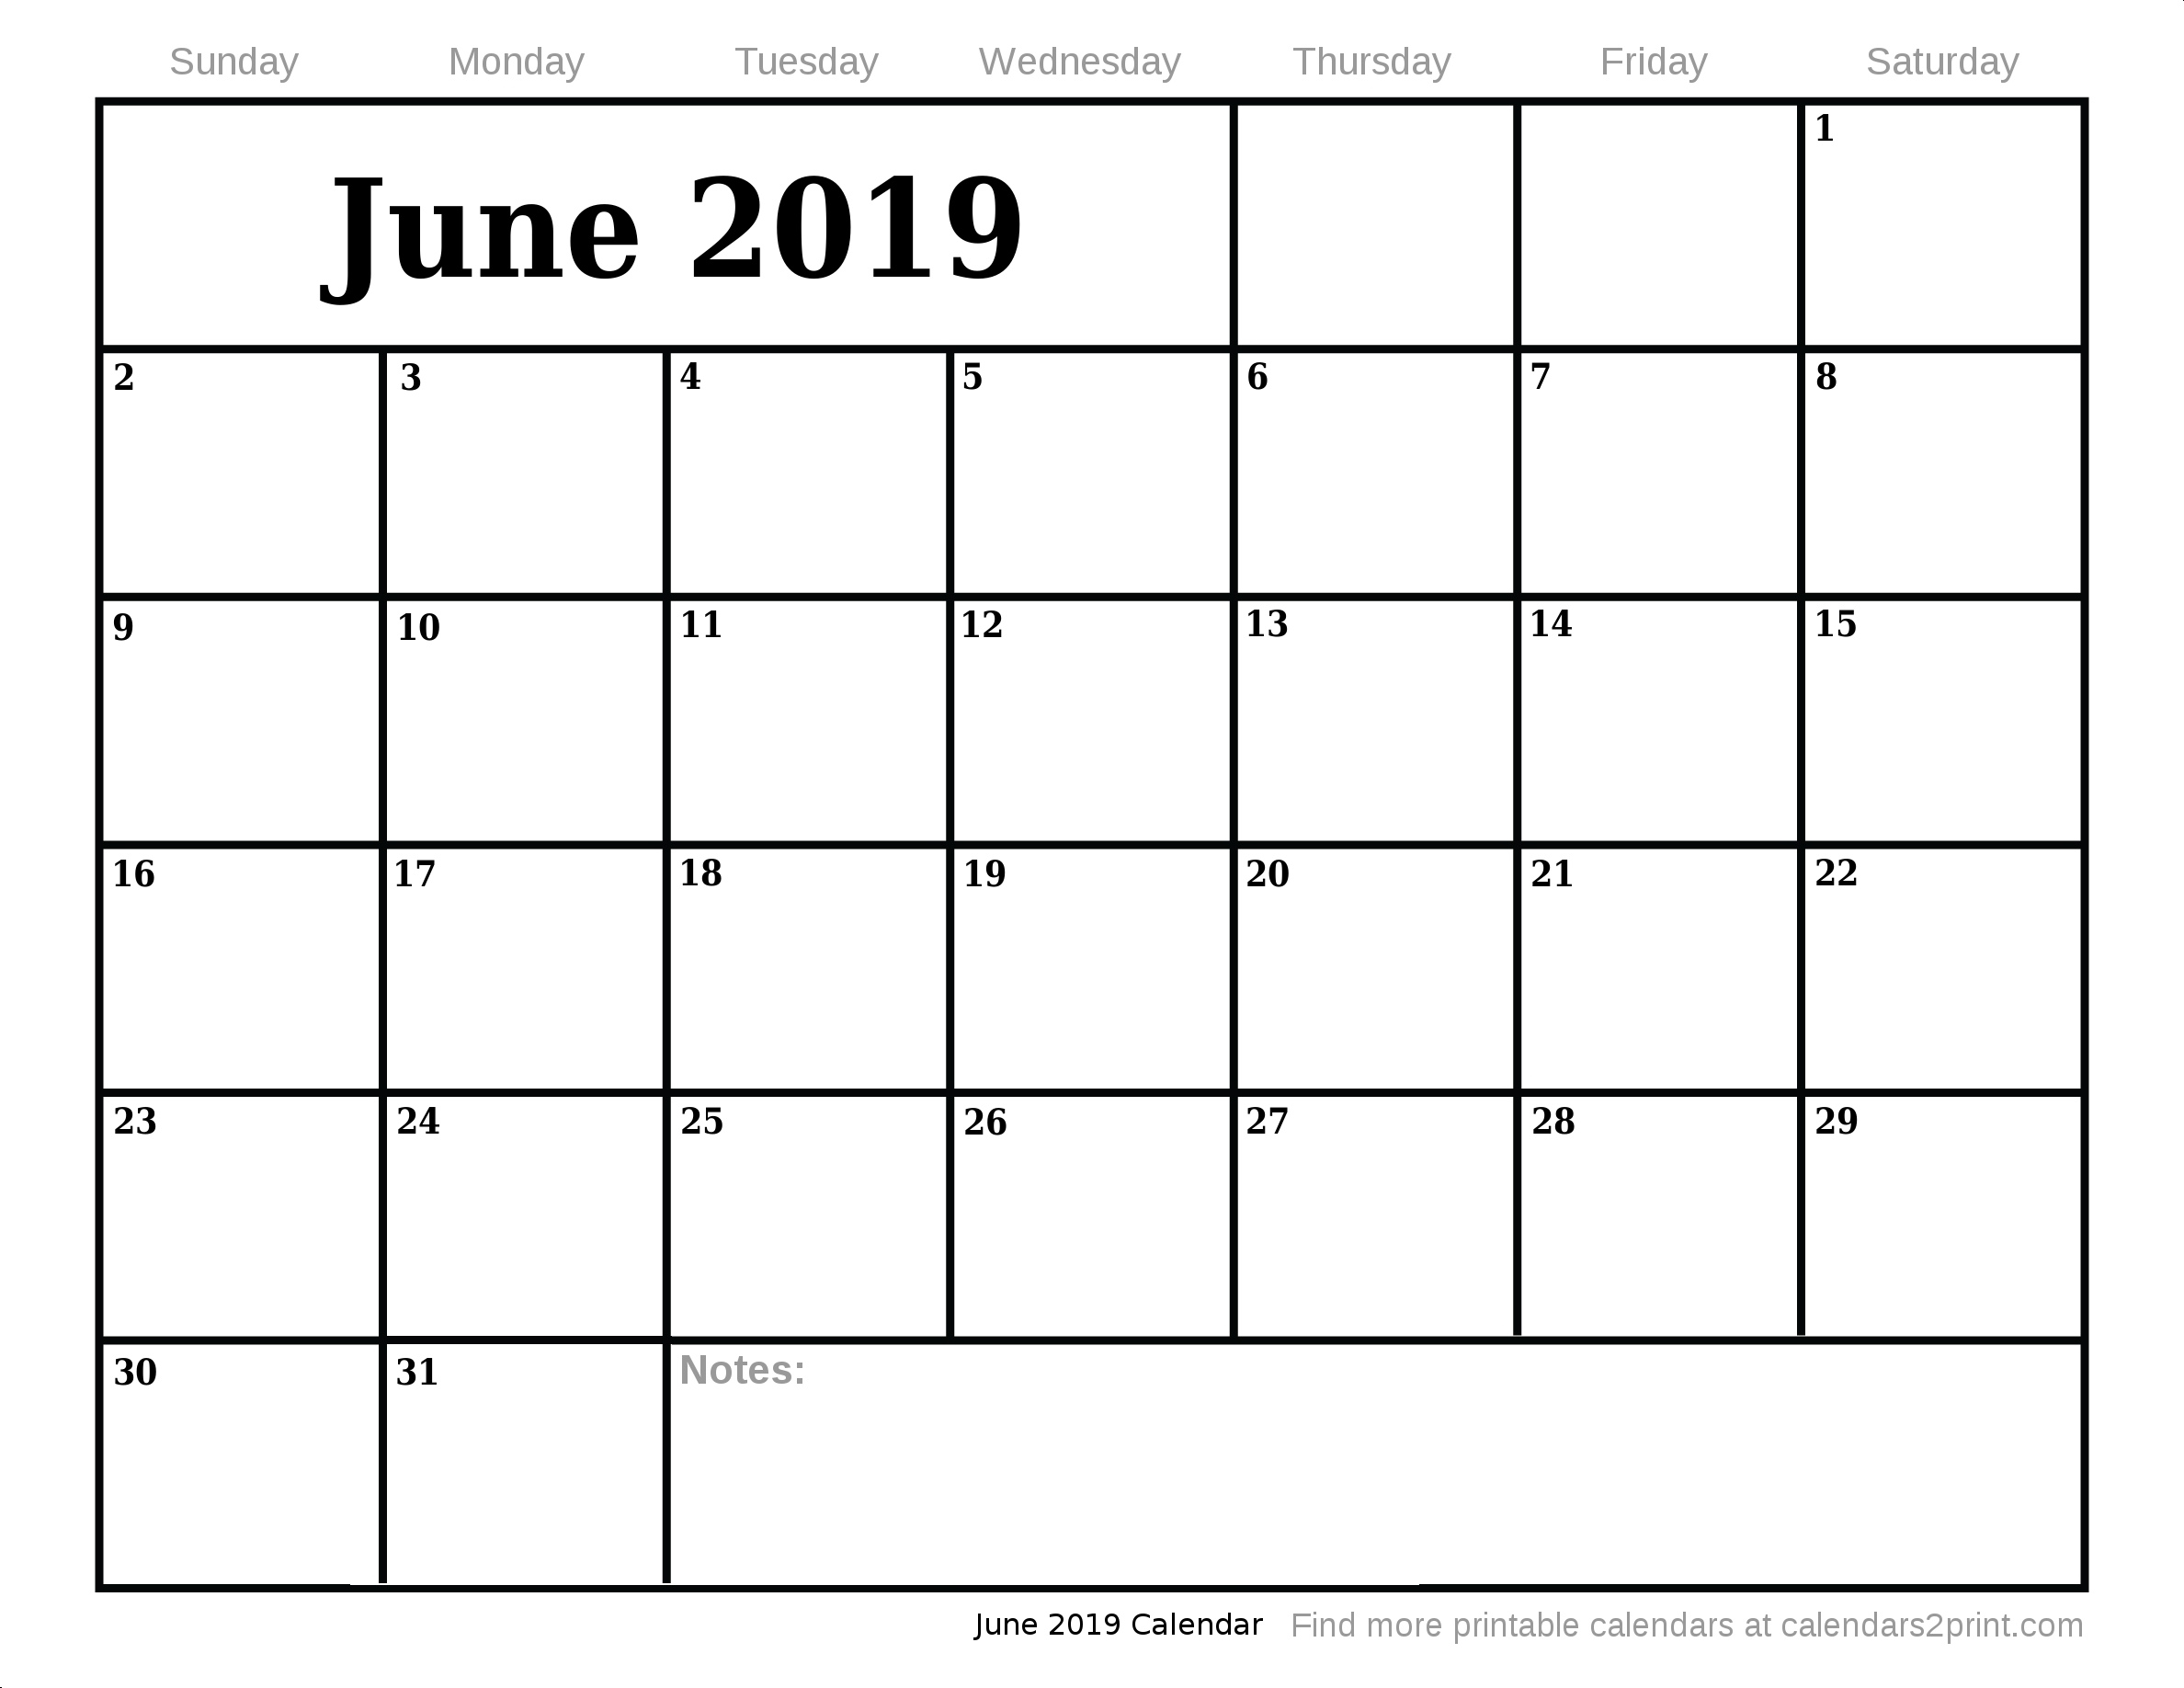 Jun 2019 Printable Calendar